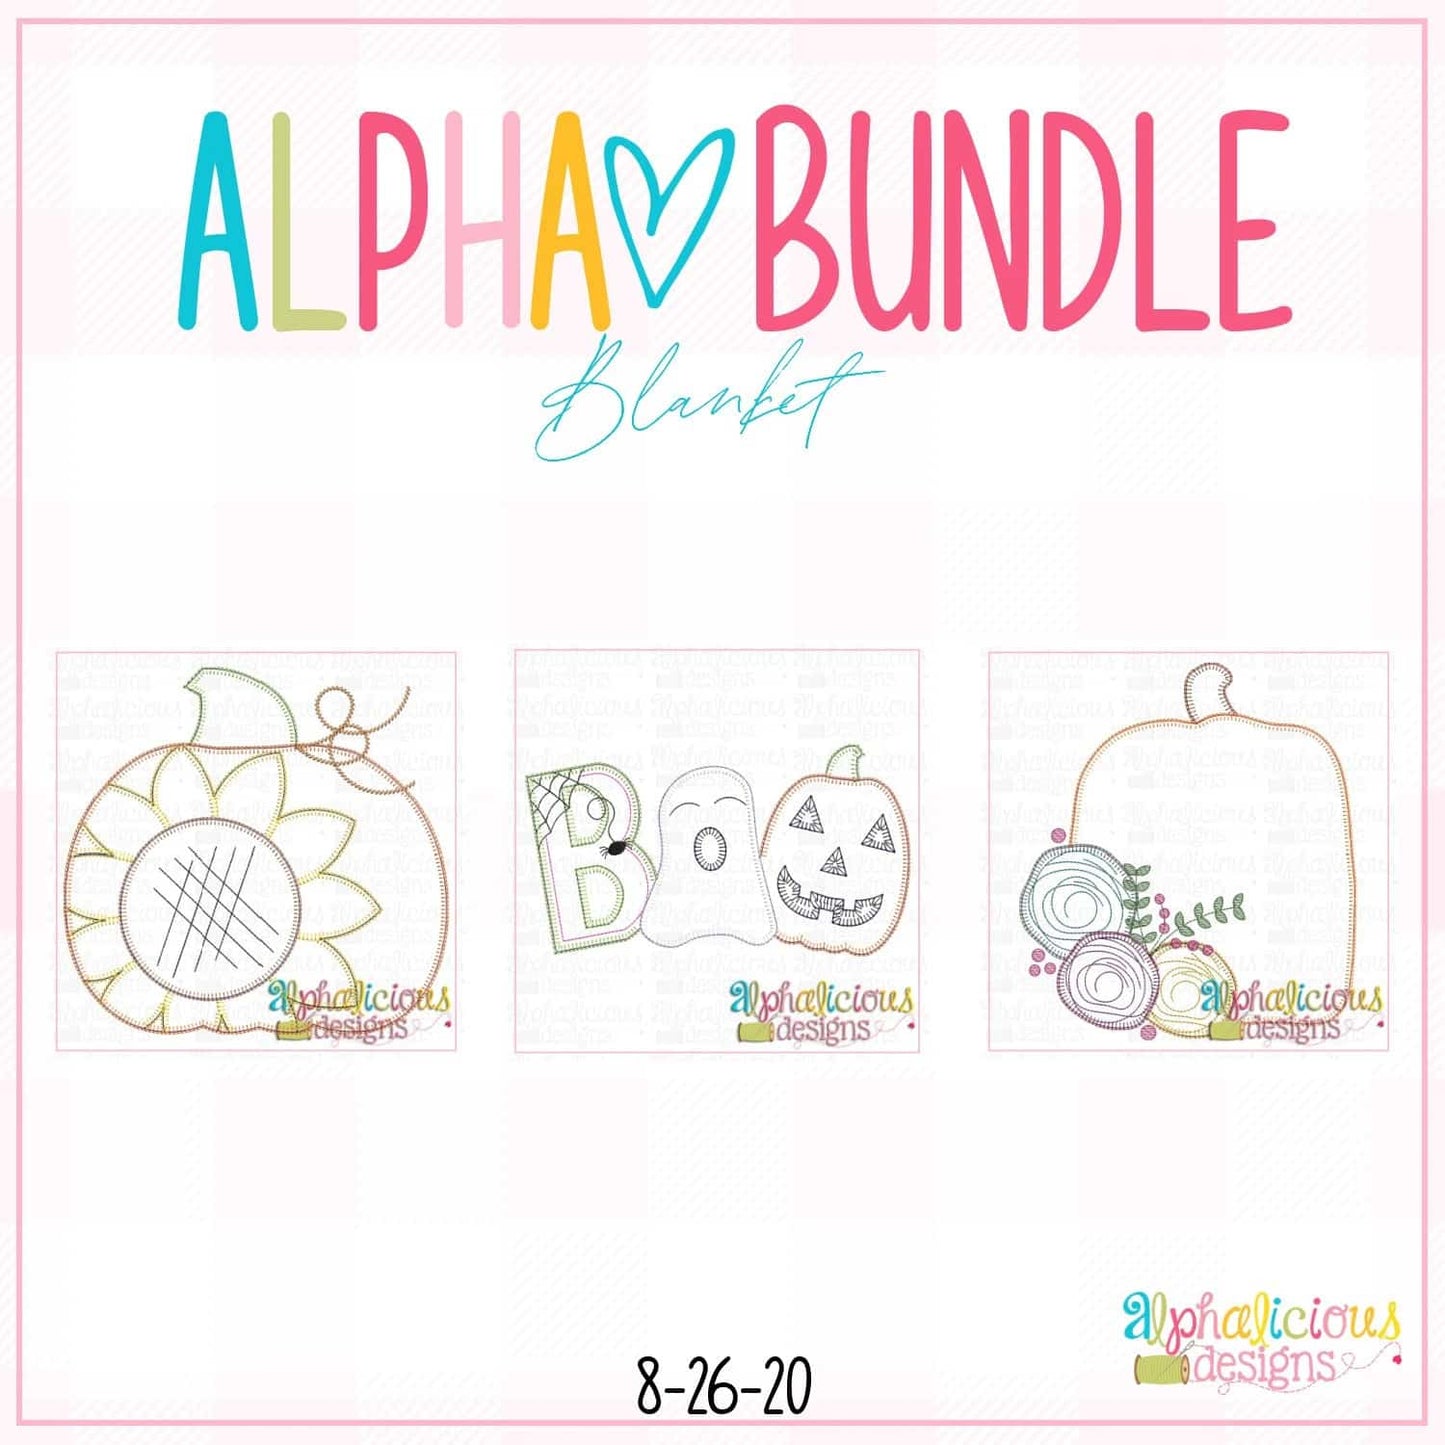 ALPHA BUNDLE-8/26/20 Release-Blanket Stitch